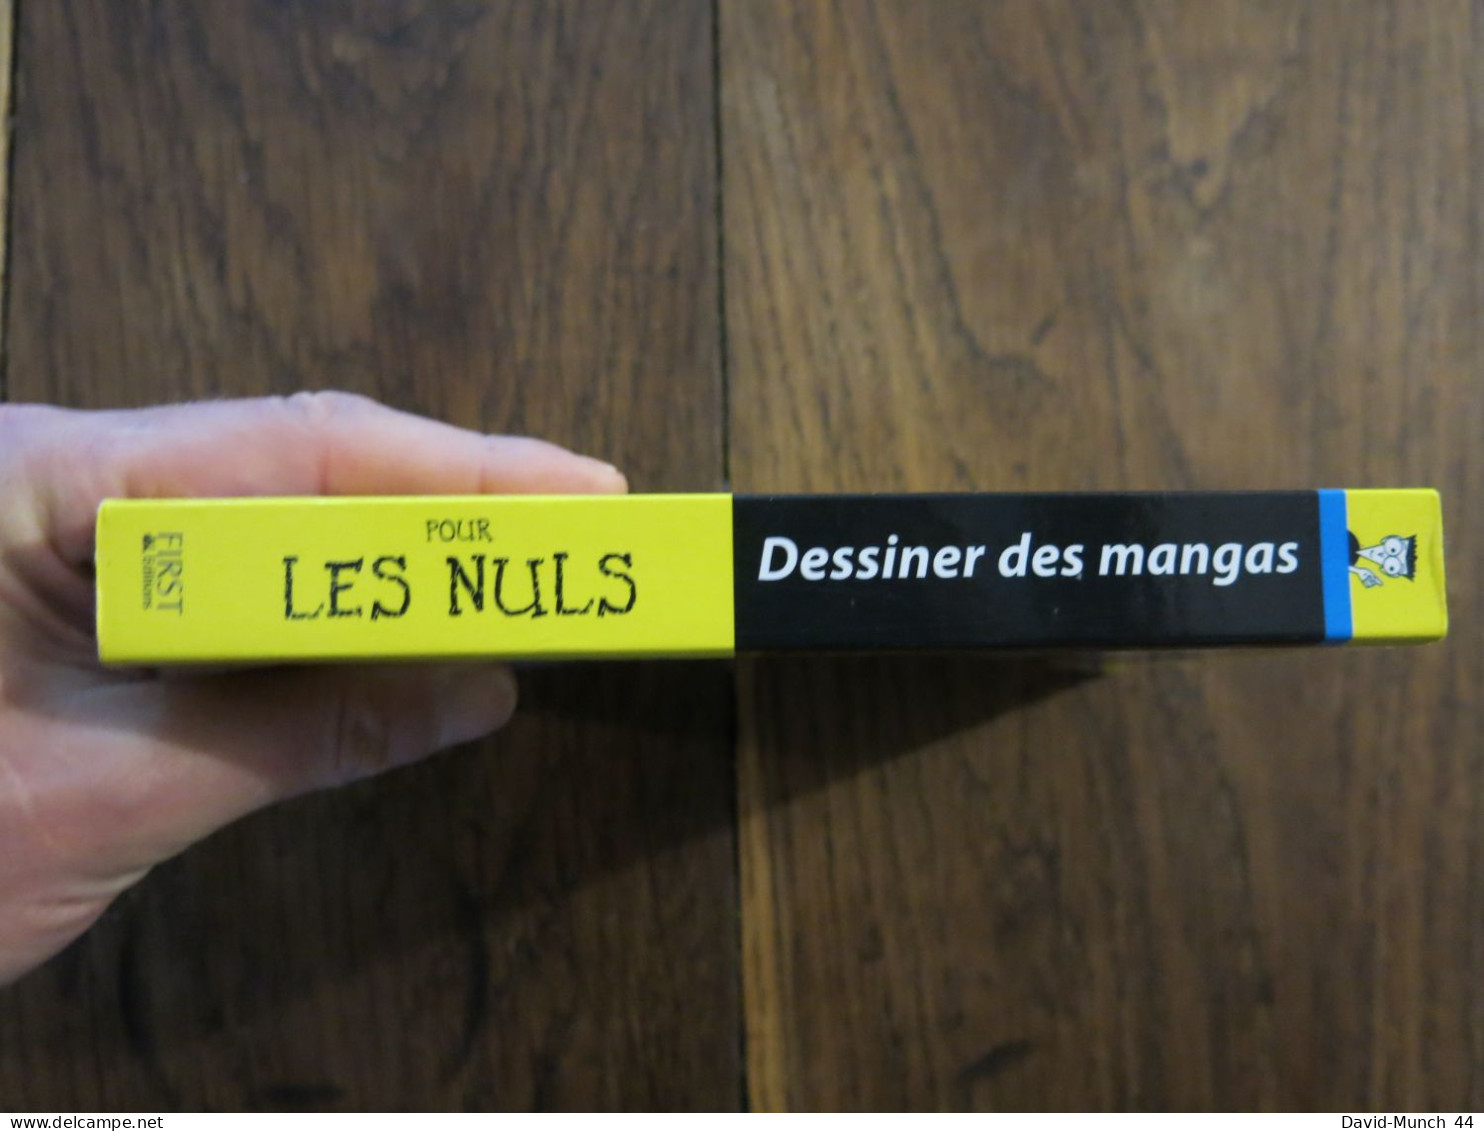 Dessiner Des Mangas, Poche Pour Les Nuls De Kensuke Okabayashi. First éditions. 2011 - Art